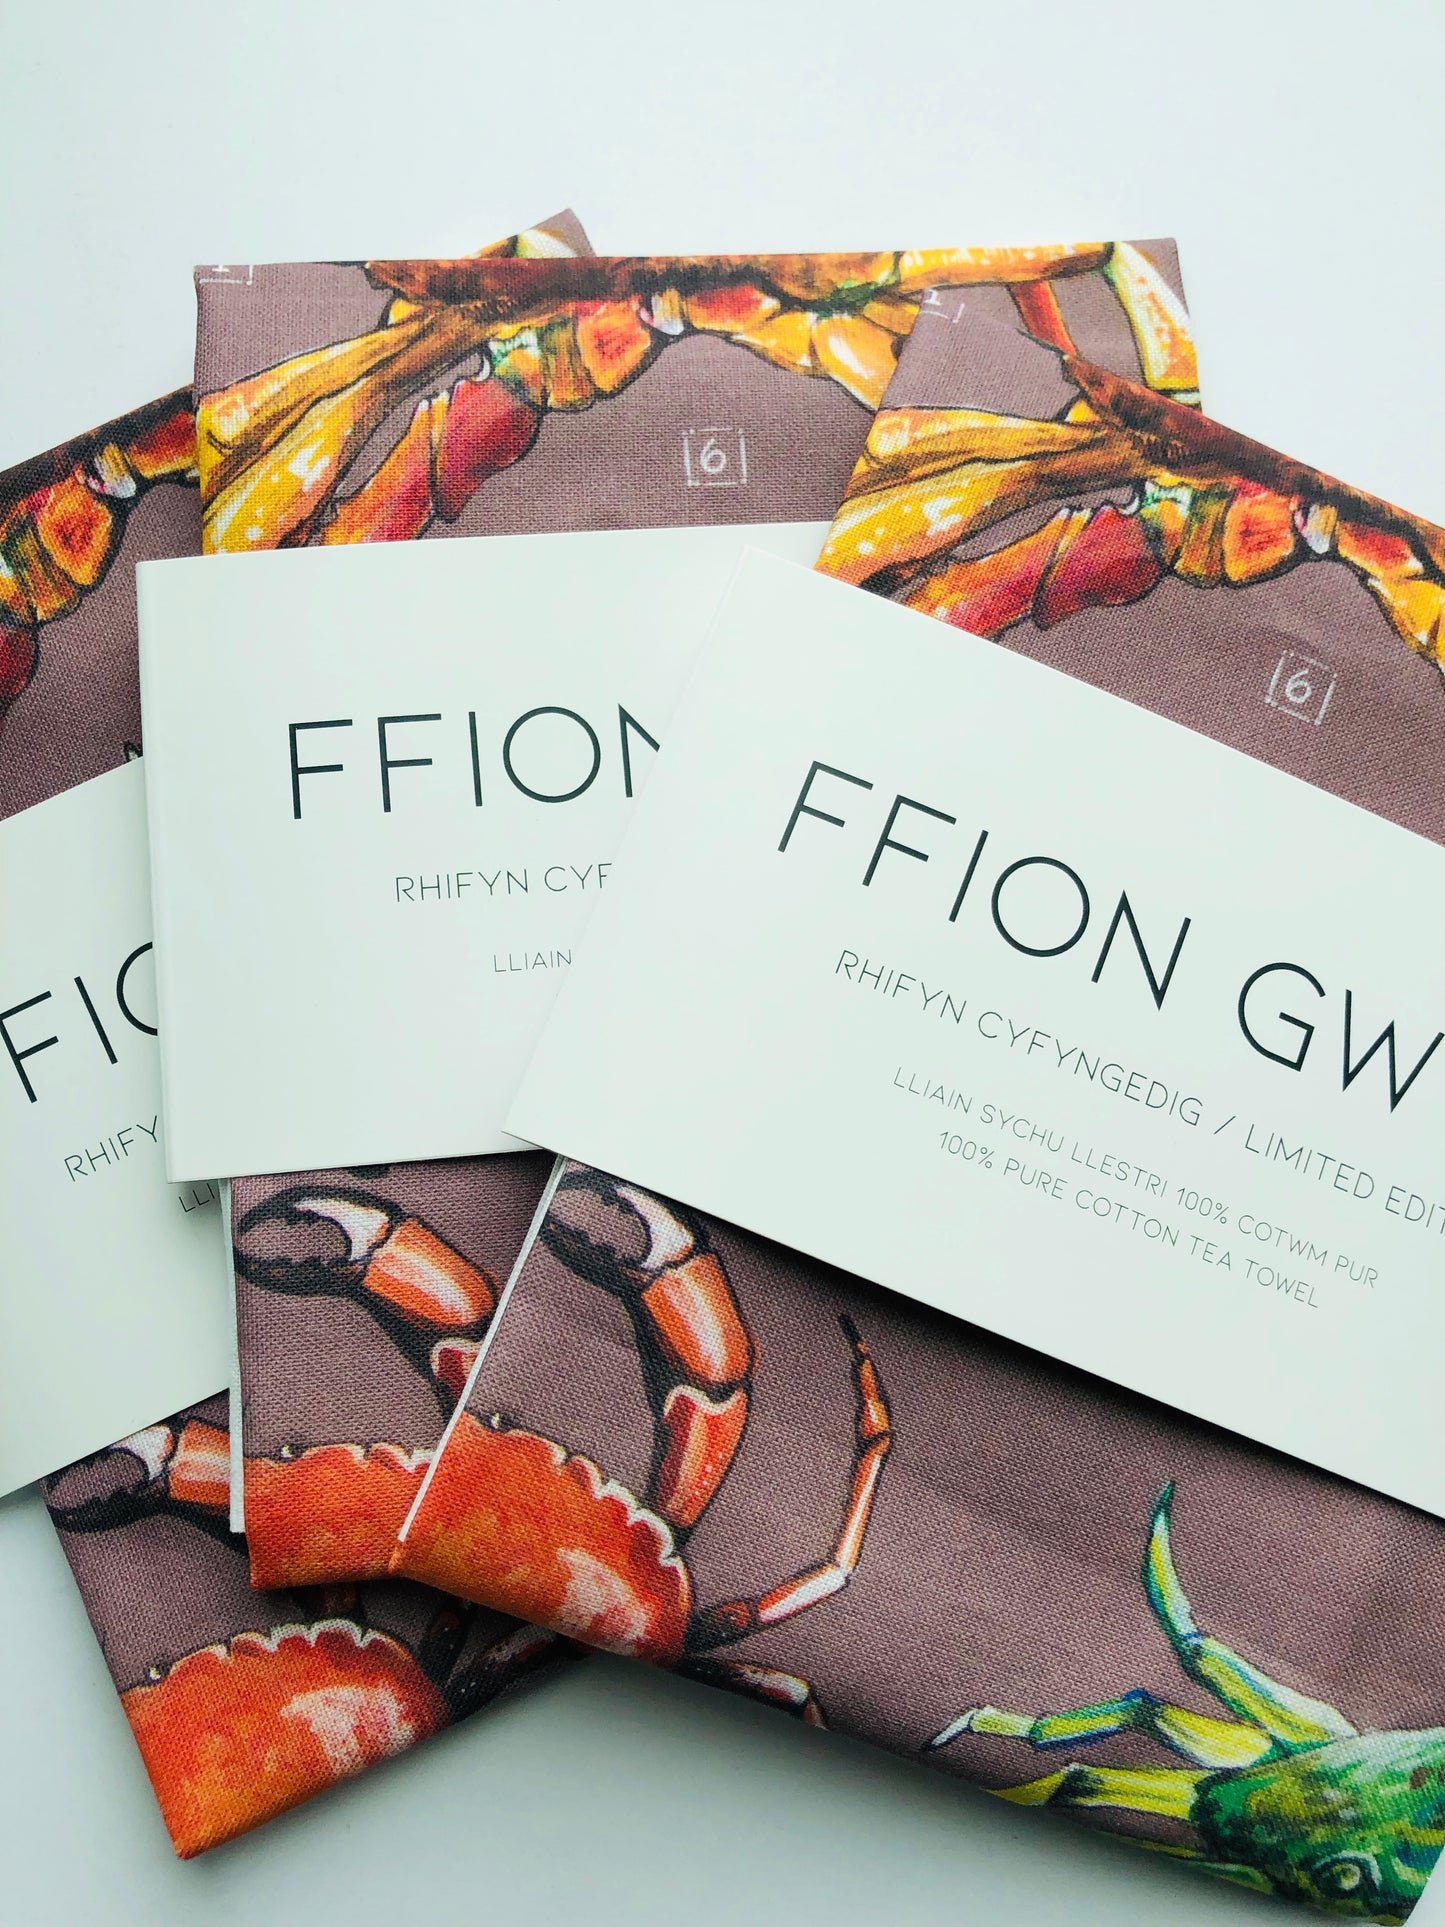 Ffion Gwyn - Heritage Tea Towel Collection - Crabs/Crancod